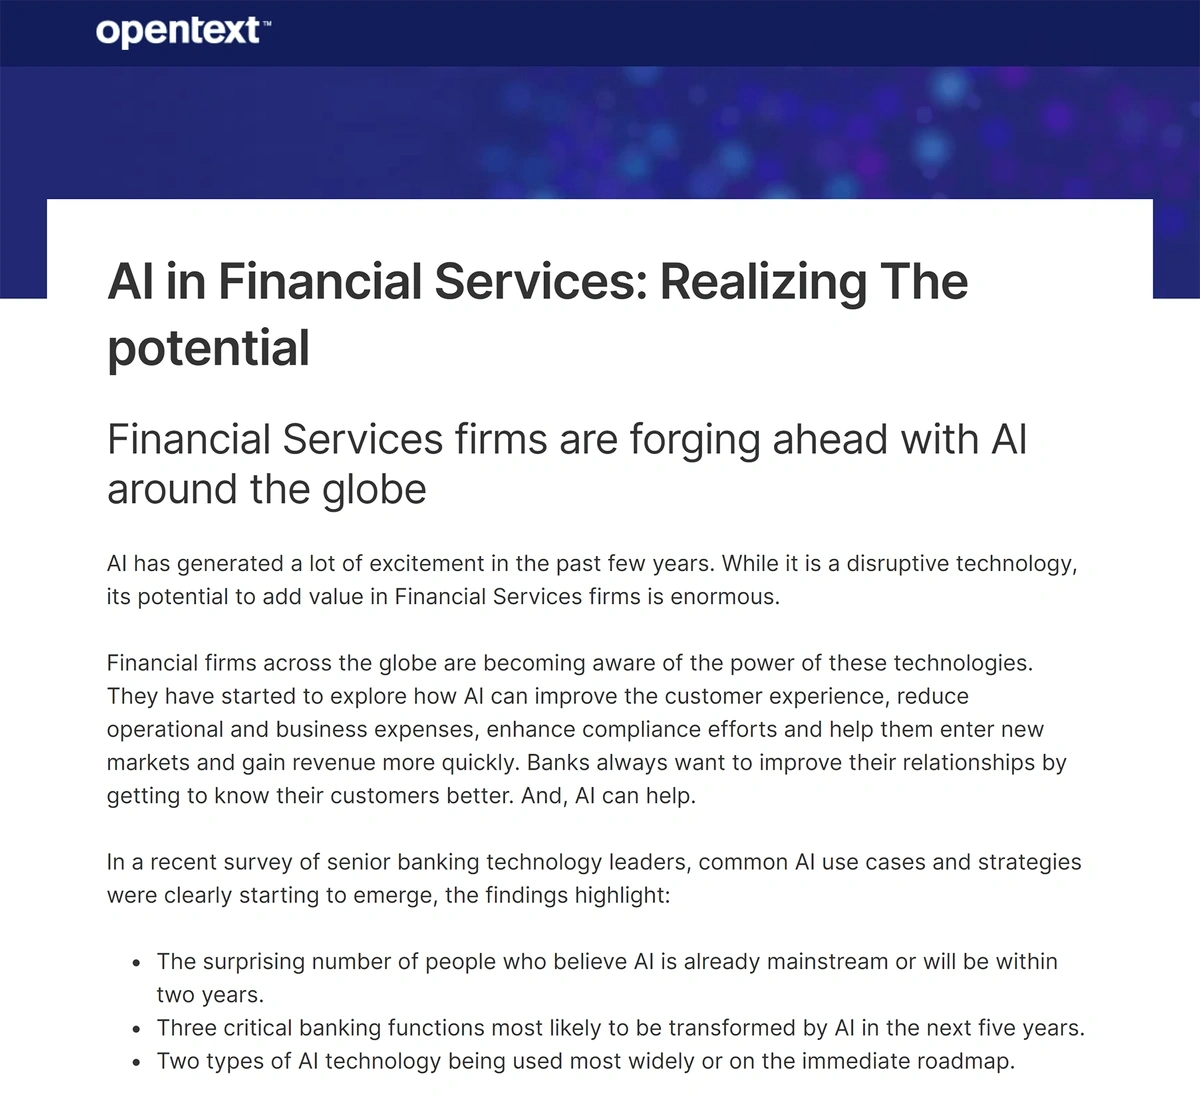 opentext-ai-financial-services-min.webp